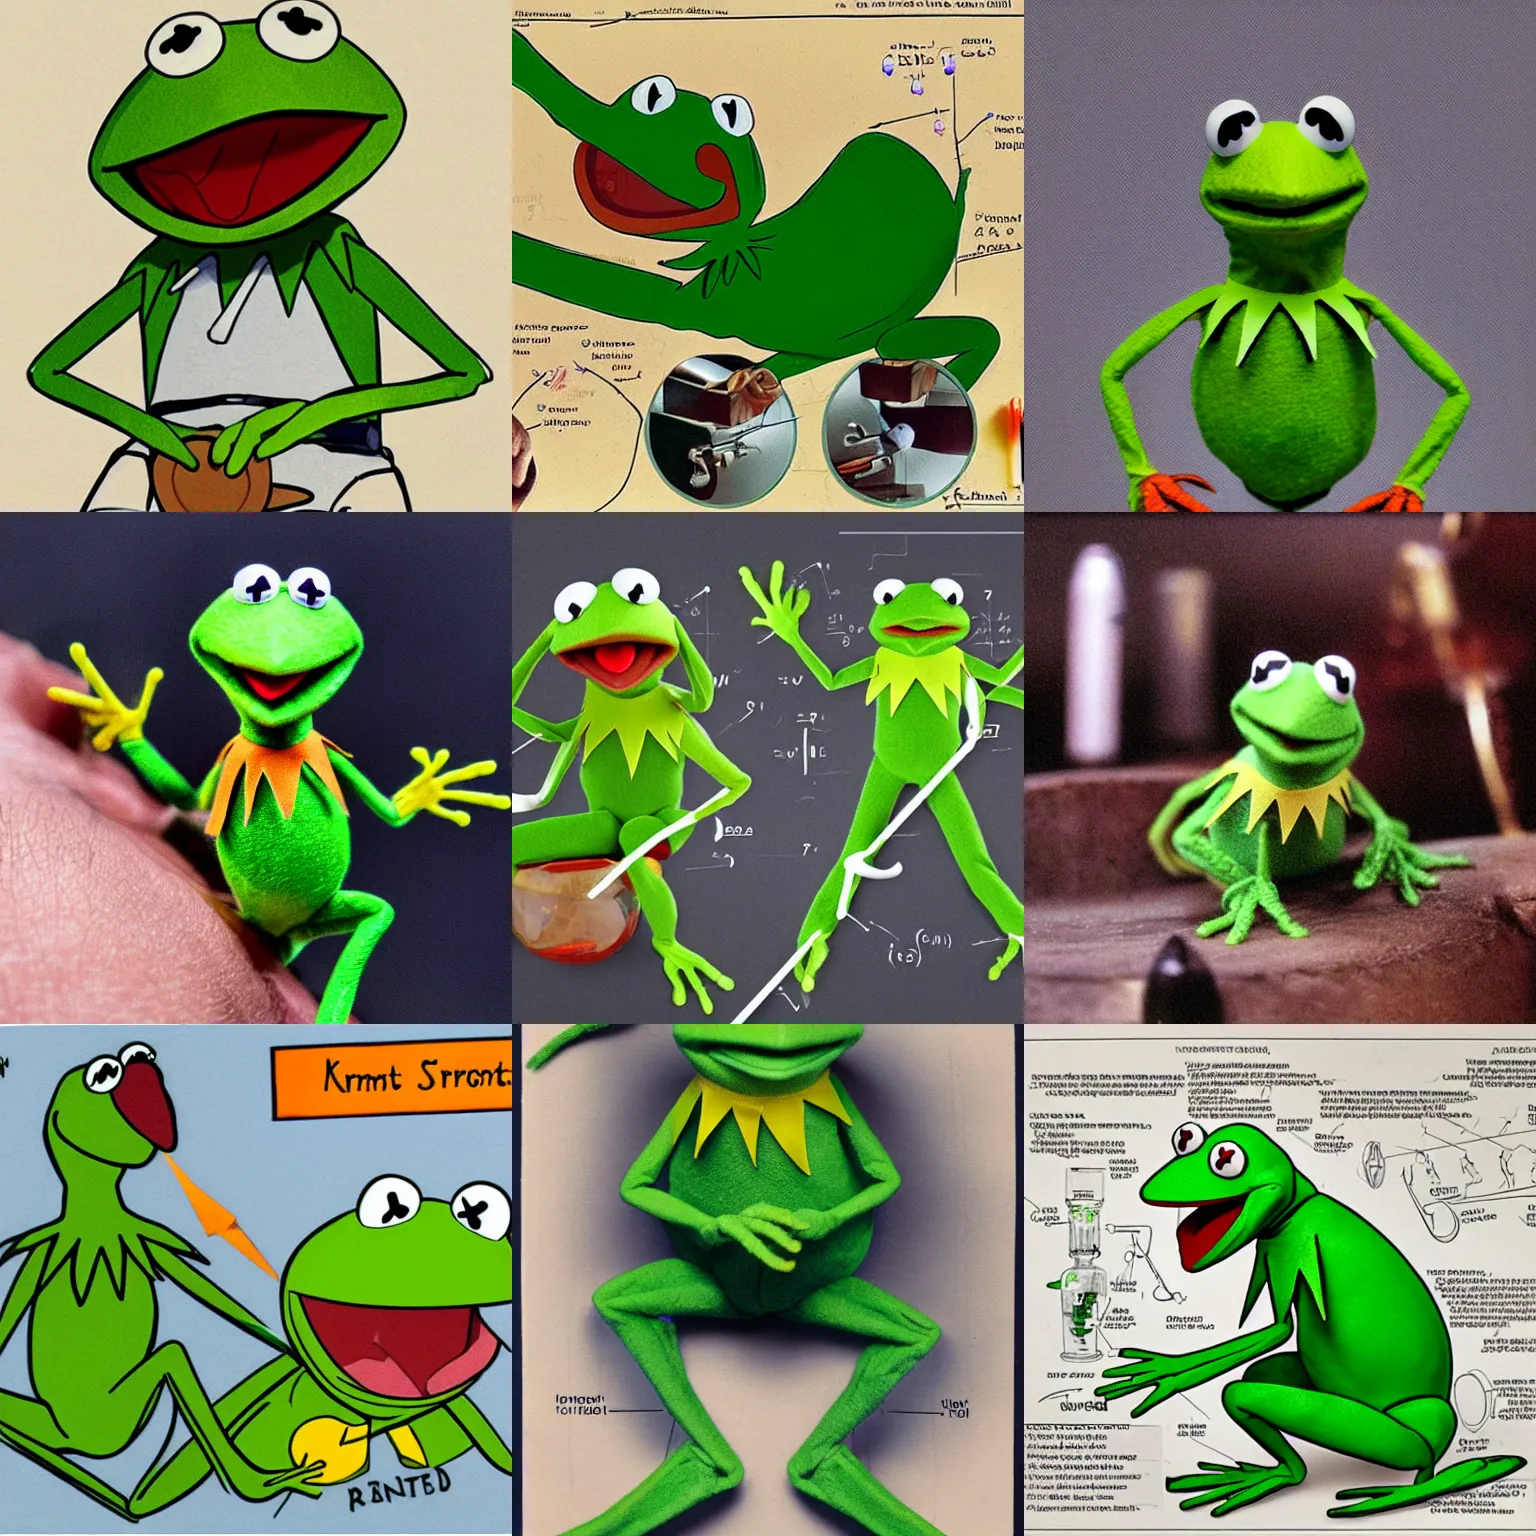 Prompt: A cutaway scientific diagram of Kermit the frog, detailed, strange